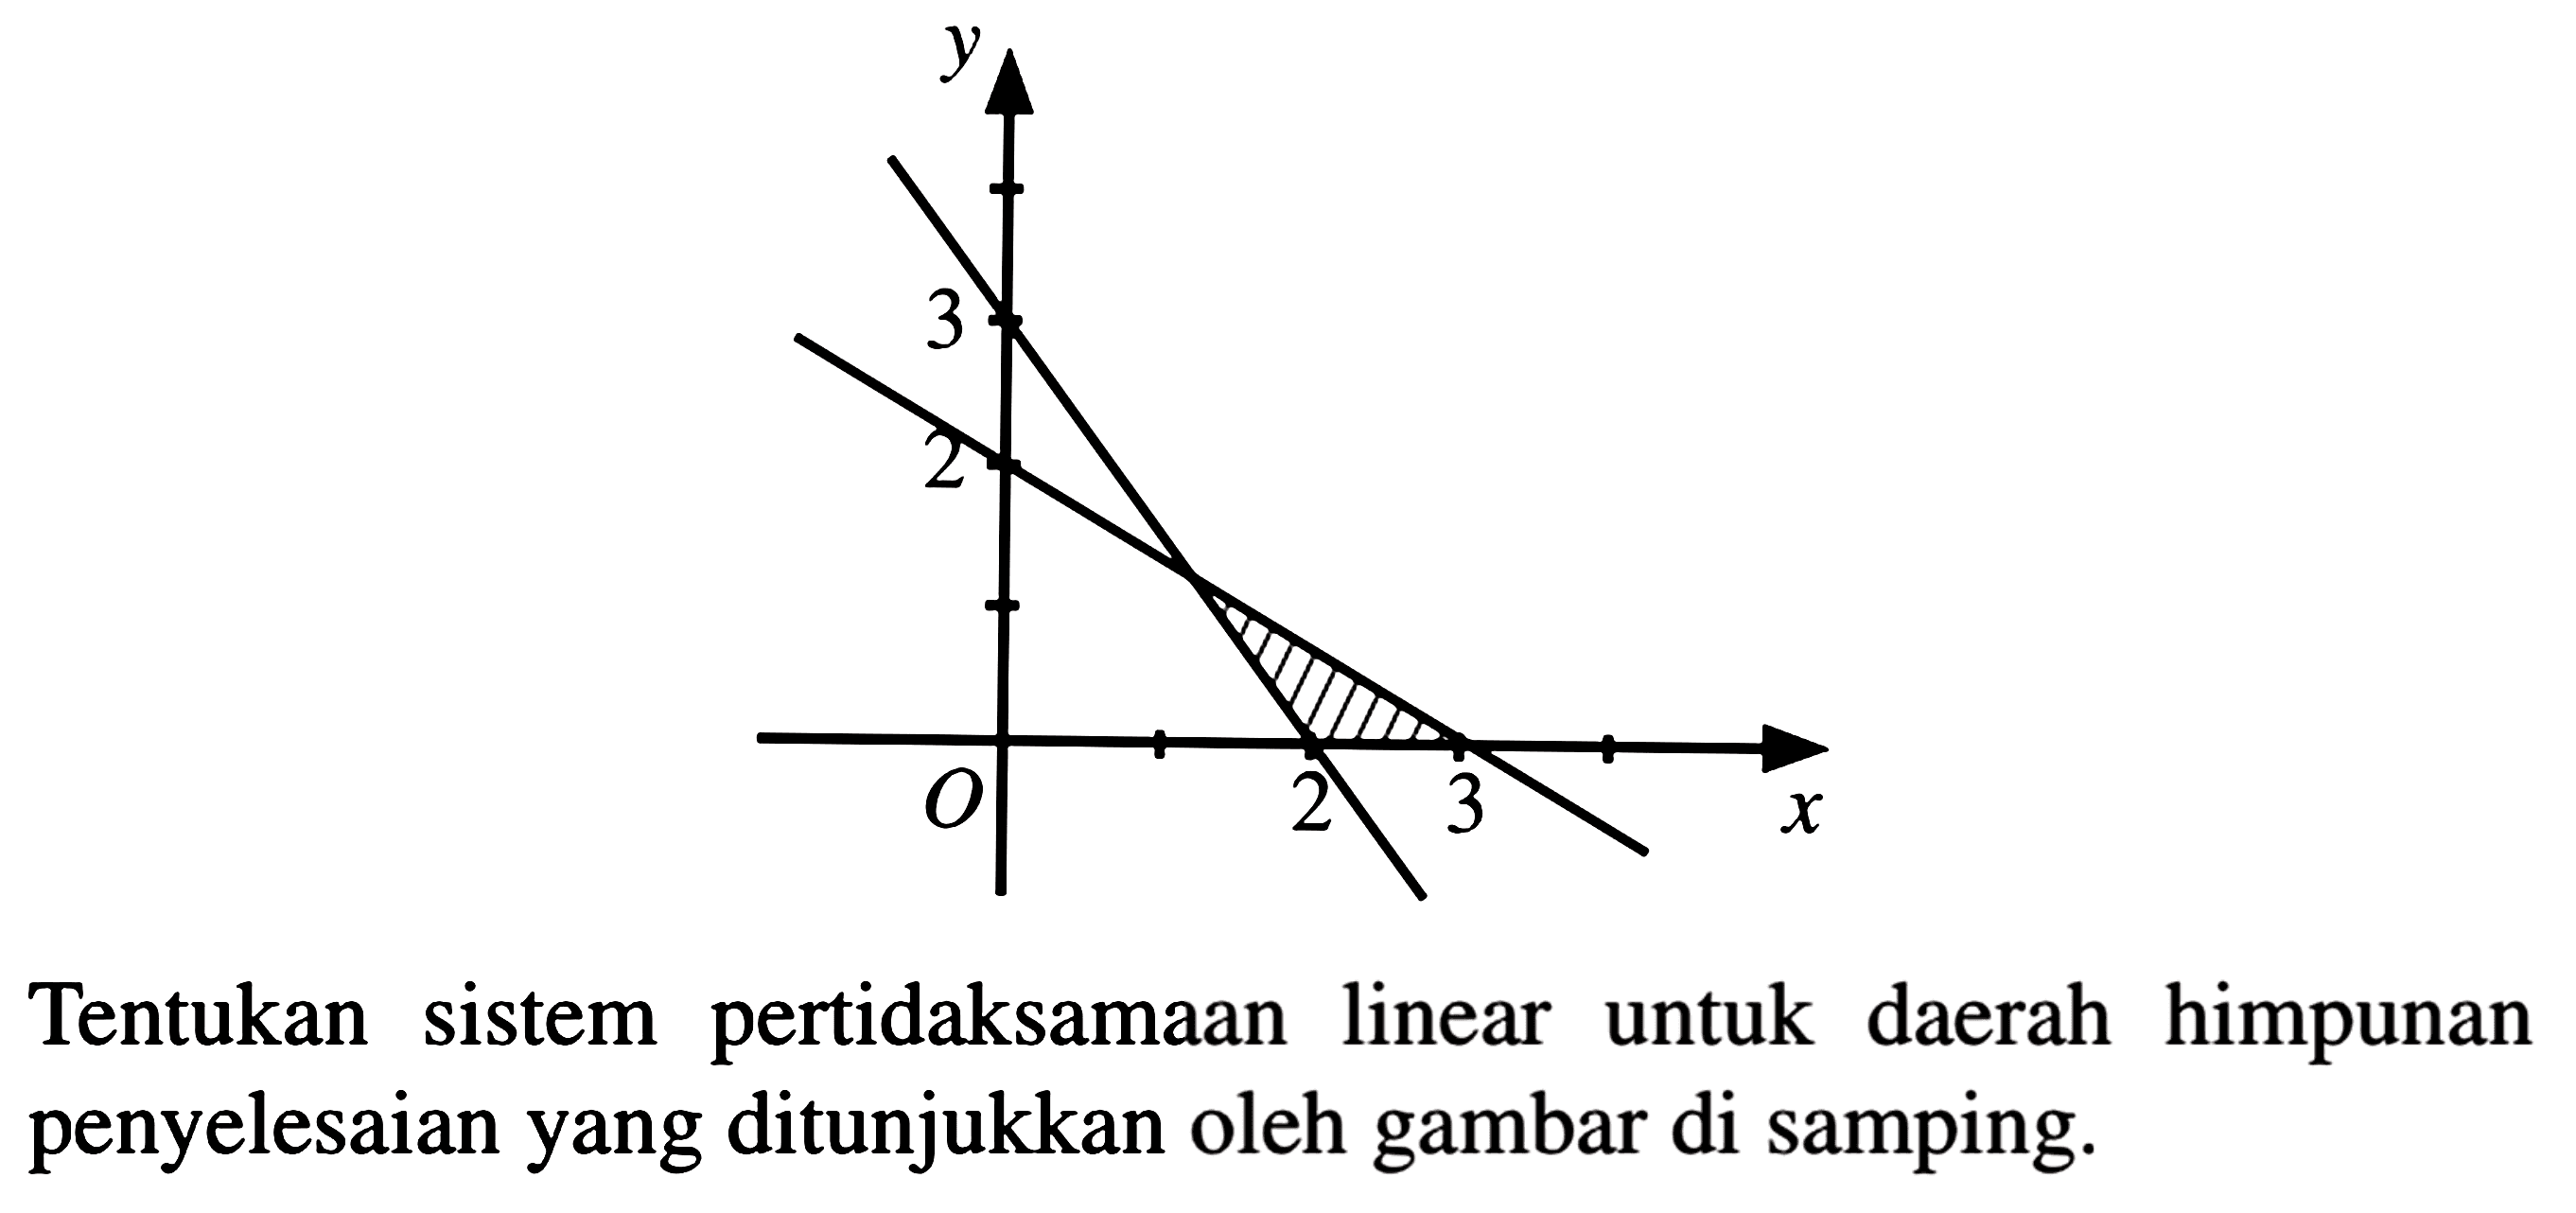 Tentukan sistem pertidaksamaan linear untuk daerah himpunan penyelesaian yang ditunjukkan oleh gambar di samping.

y 3 2 O 2 3 x